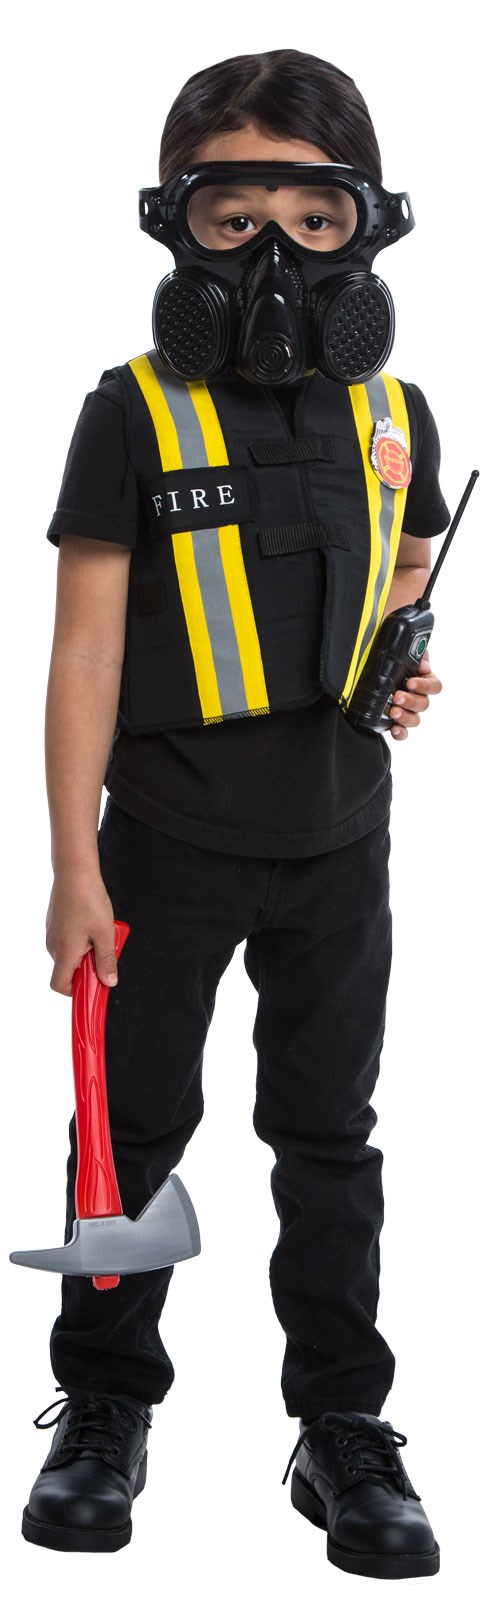 Fireman Accessory Kit